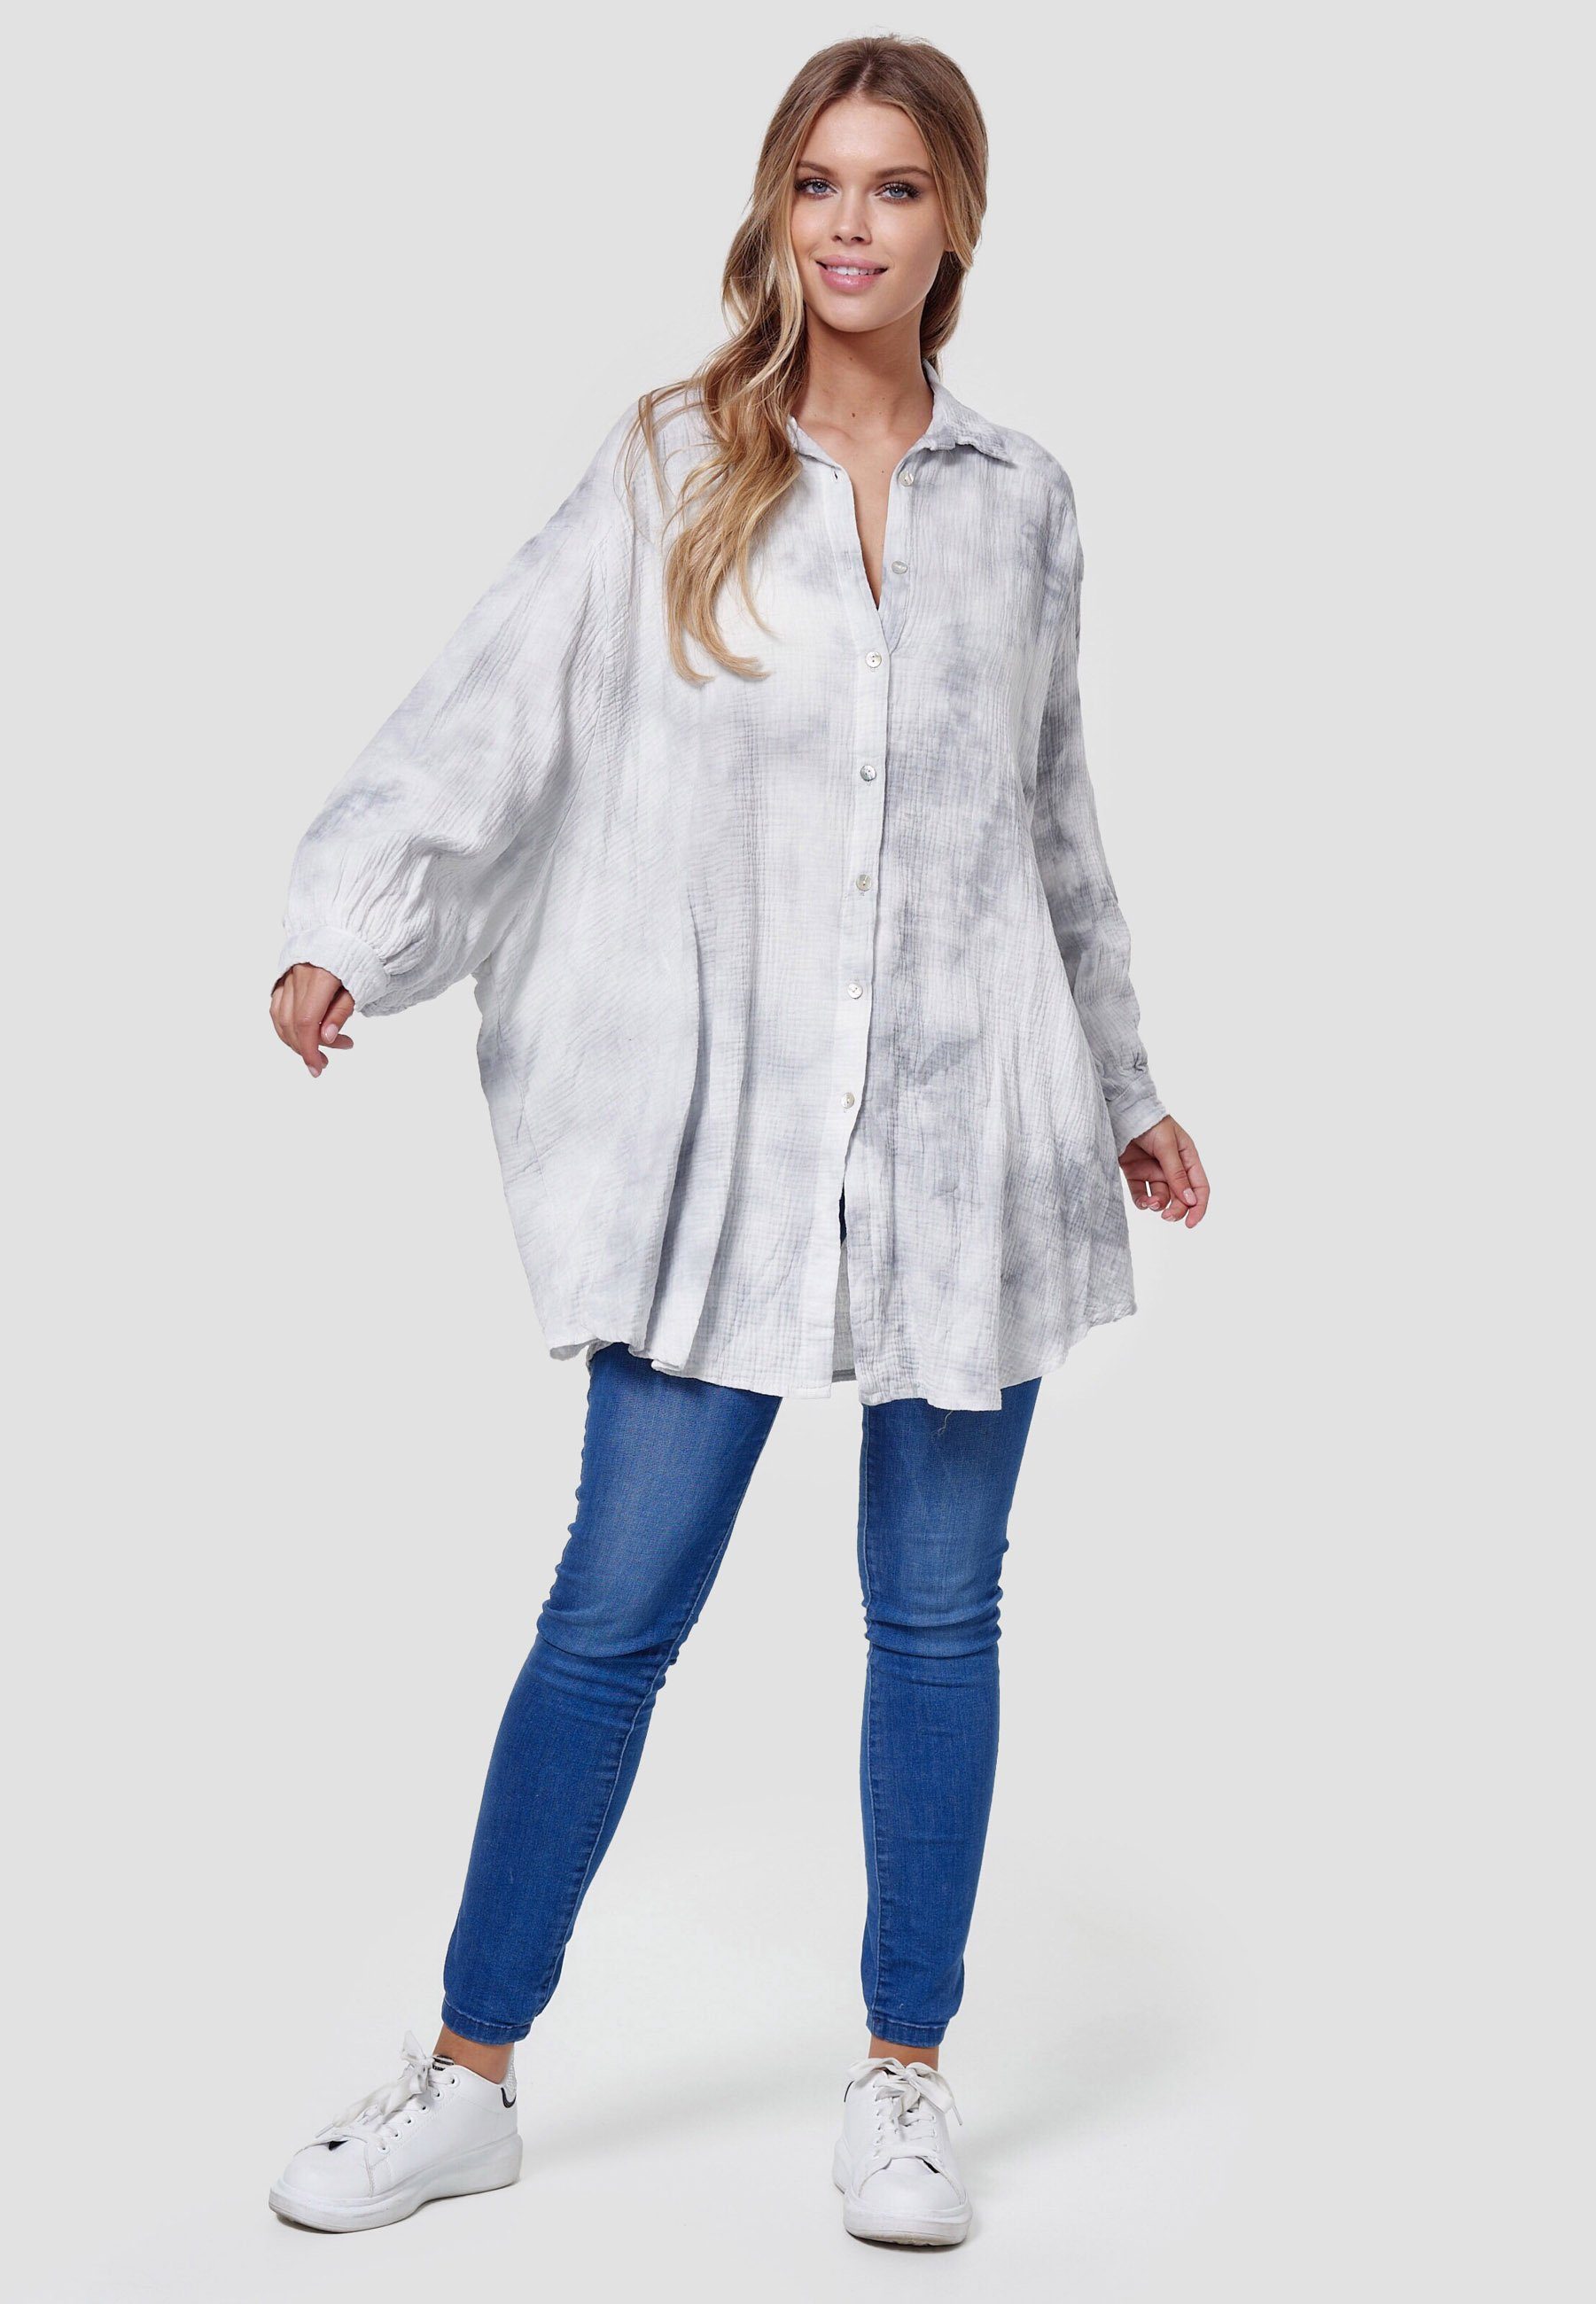 Damen Blusen Decay Klassische Bluse in tollem Design